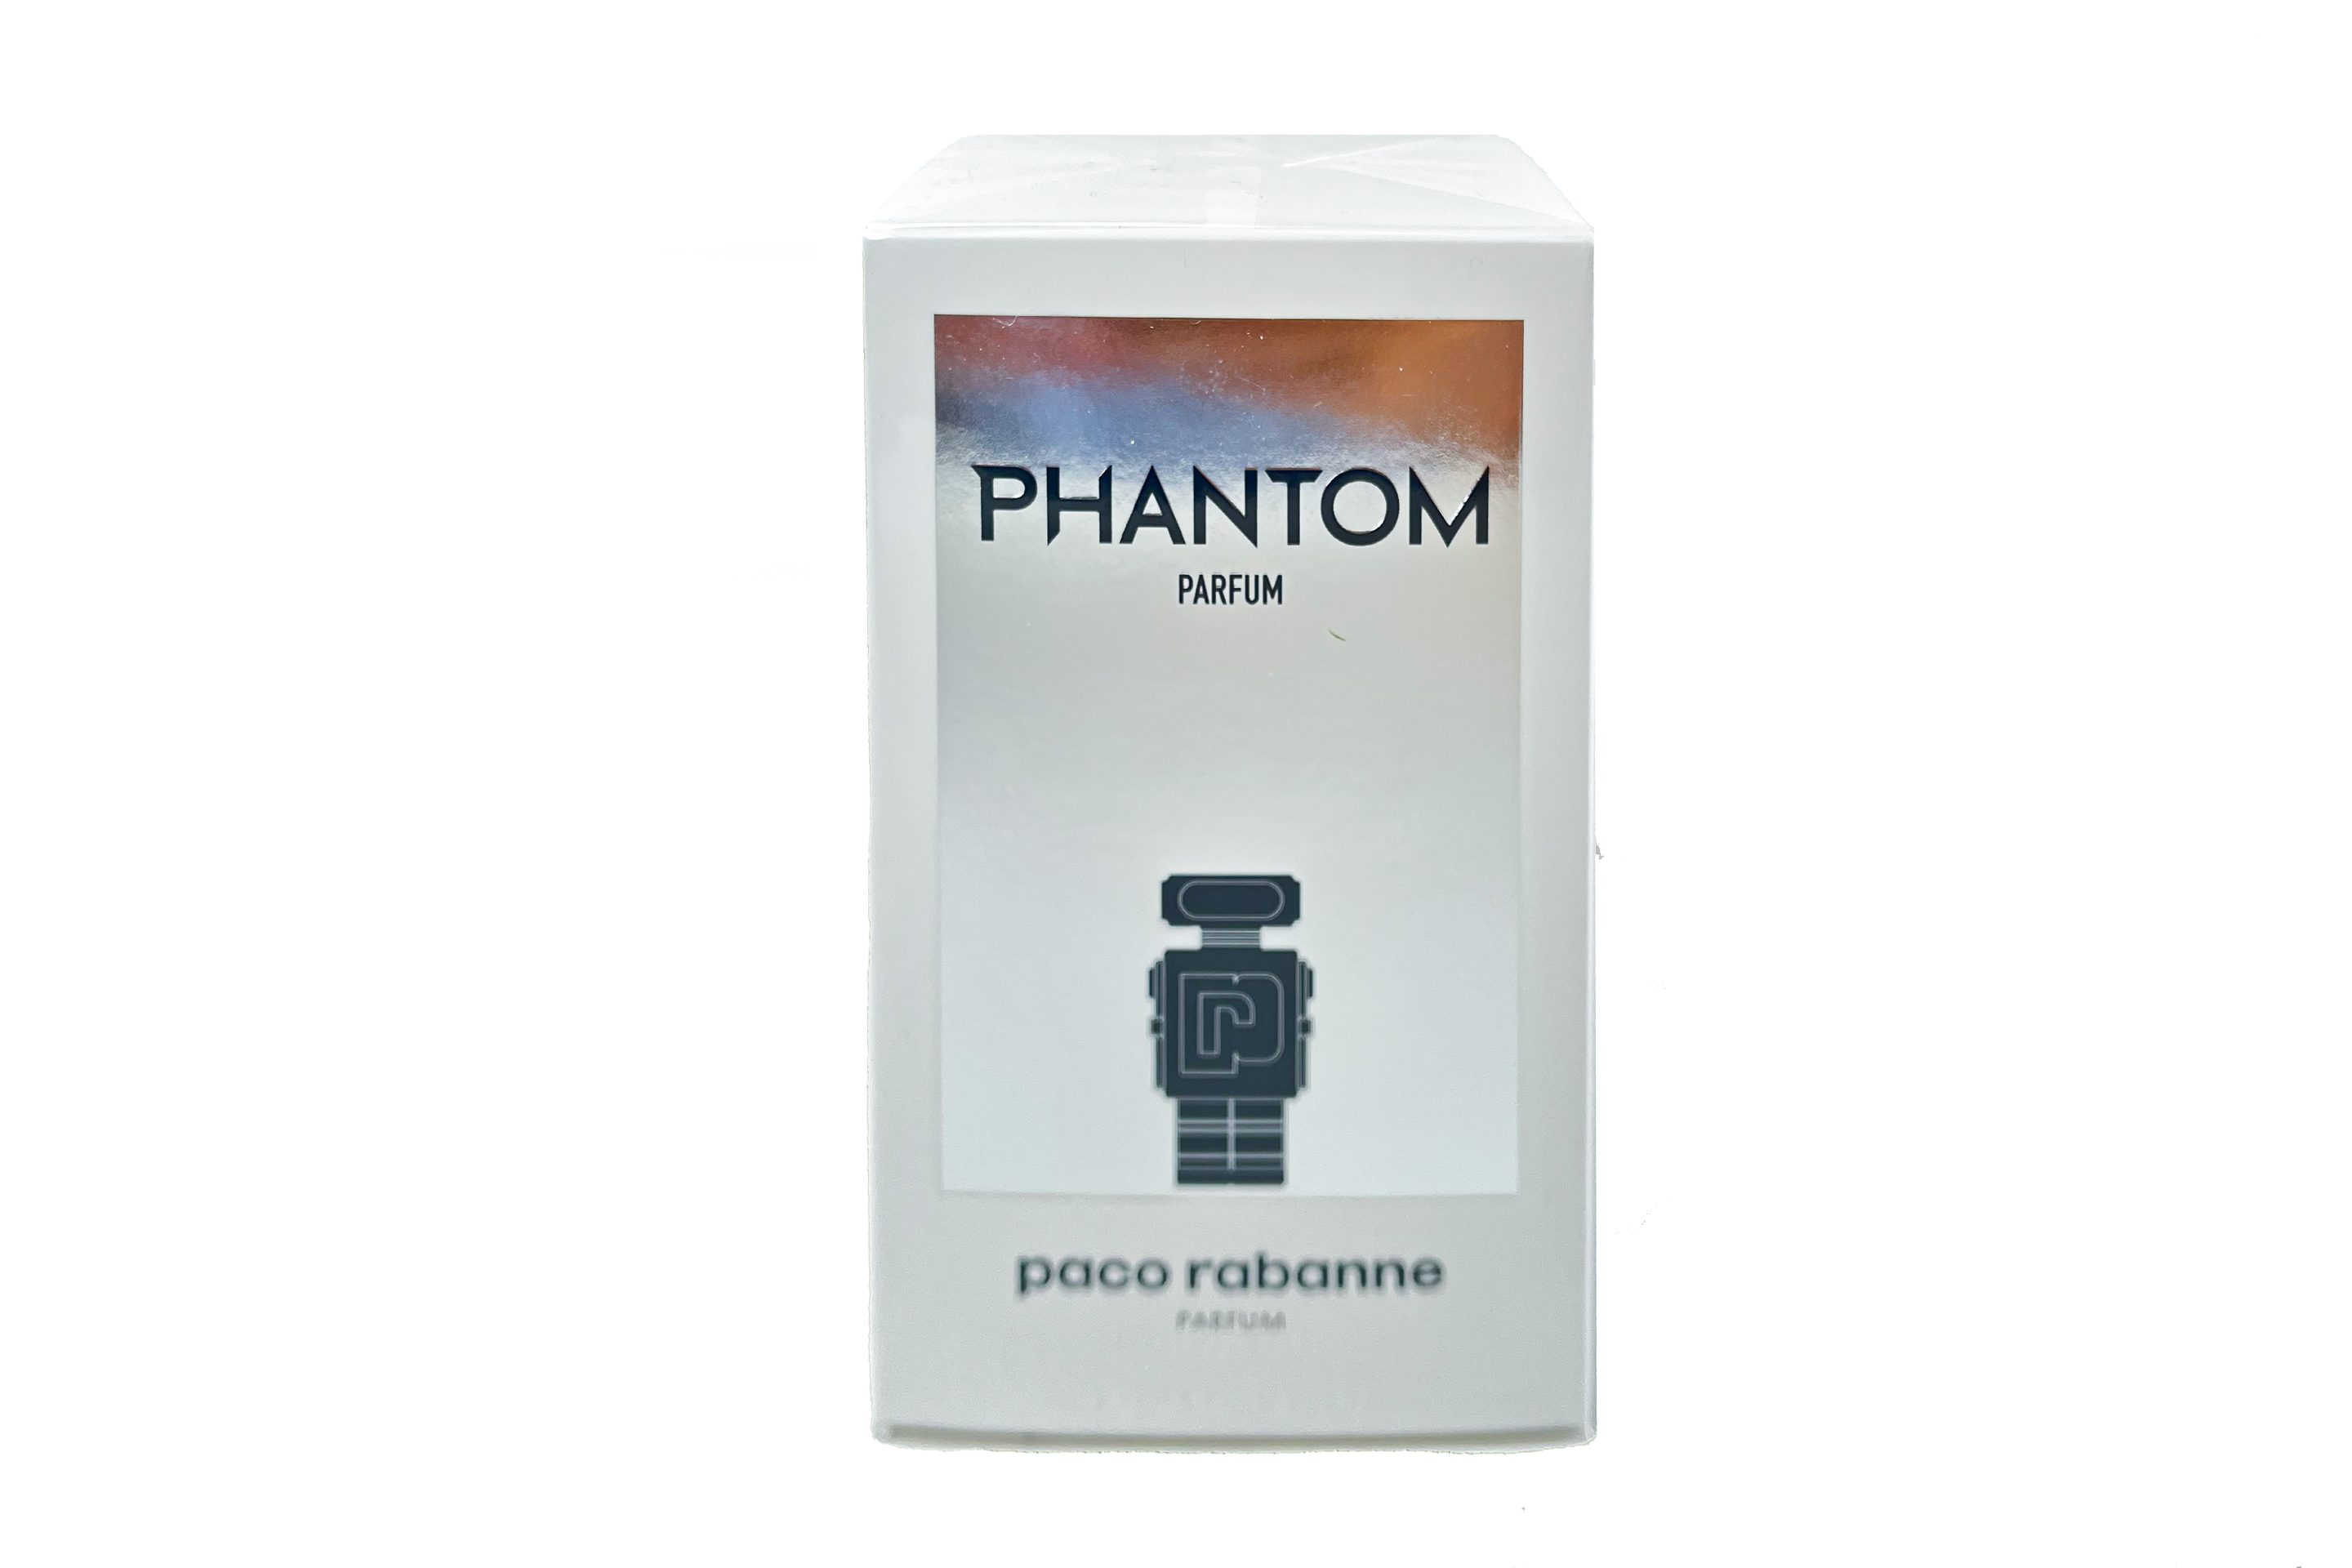 Phantom Rabanne rabanne Parfum Parfum Paco paco Duftneuheit Spray, Extrait